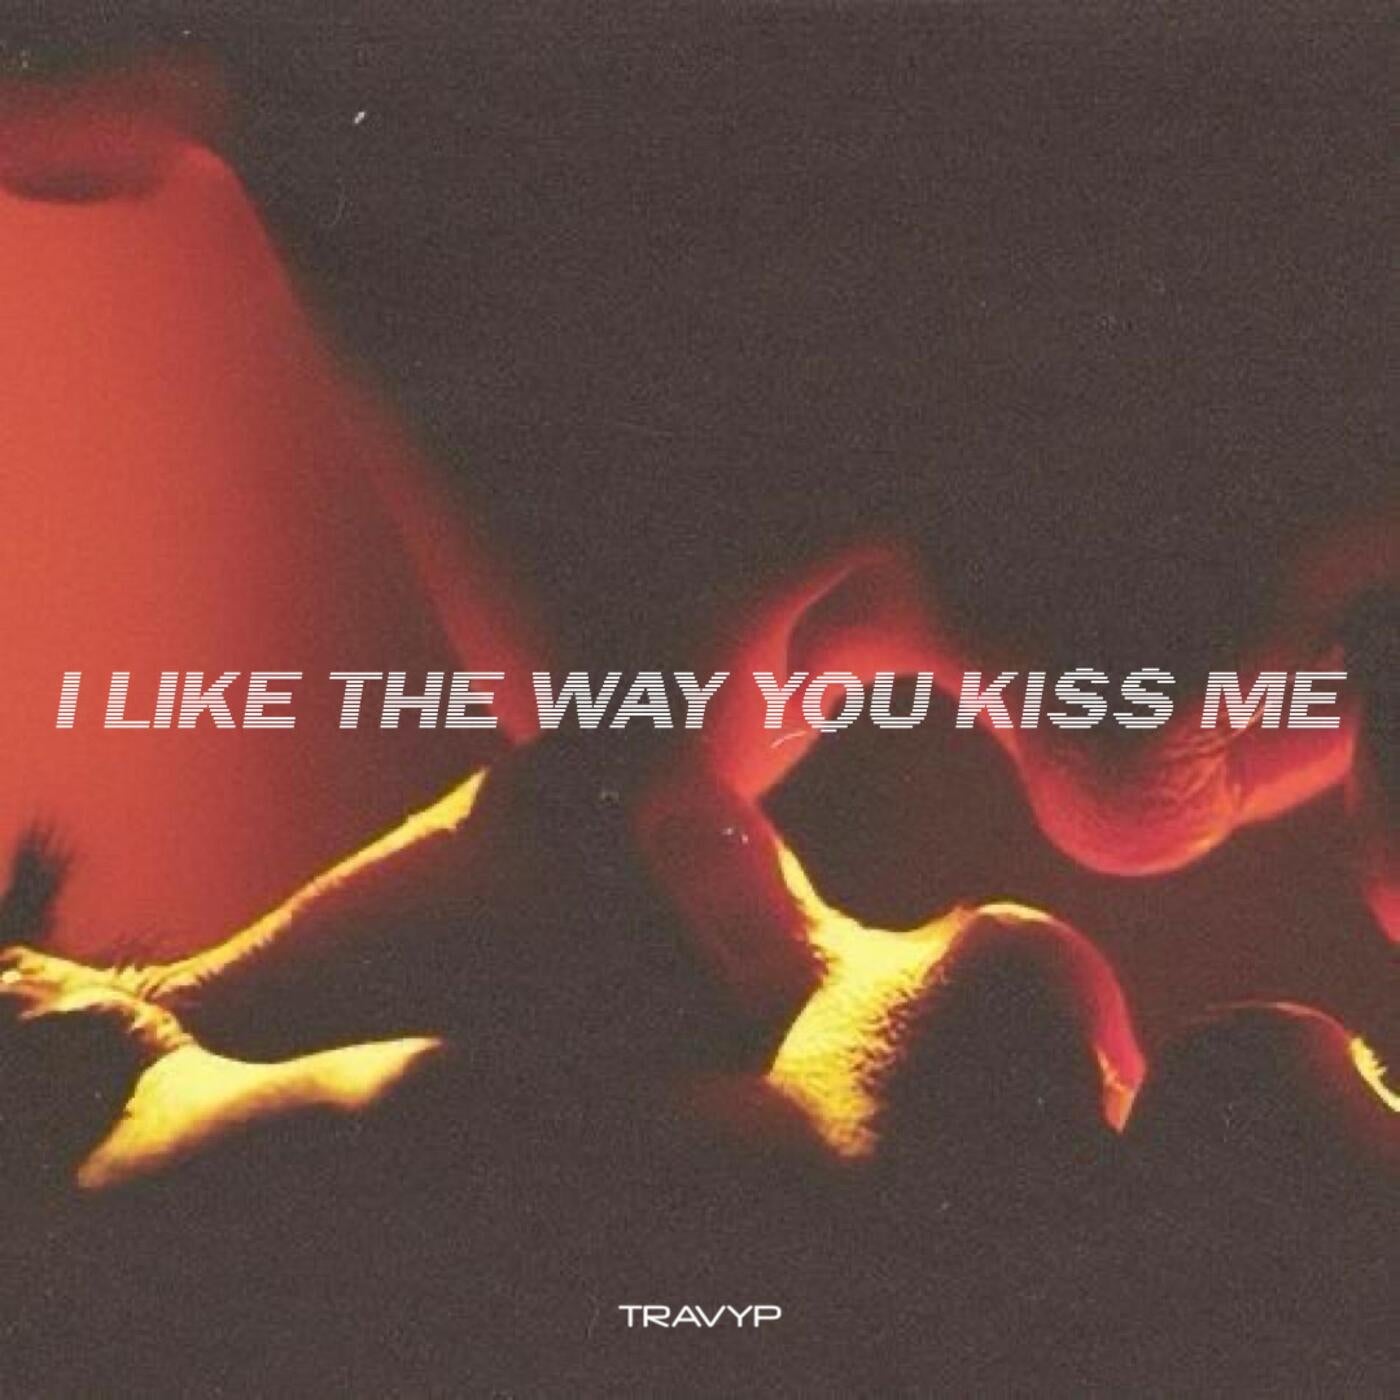 Cover - travyp - I LIKE THE WAY YOU KISS ME (Original Mix)